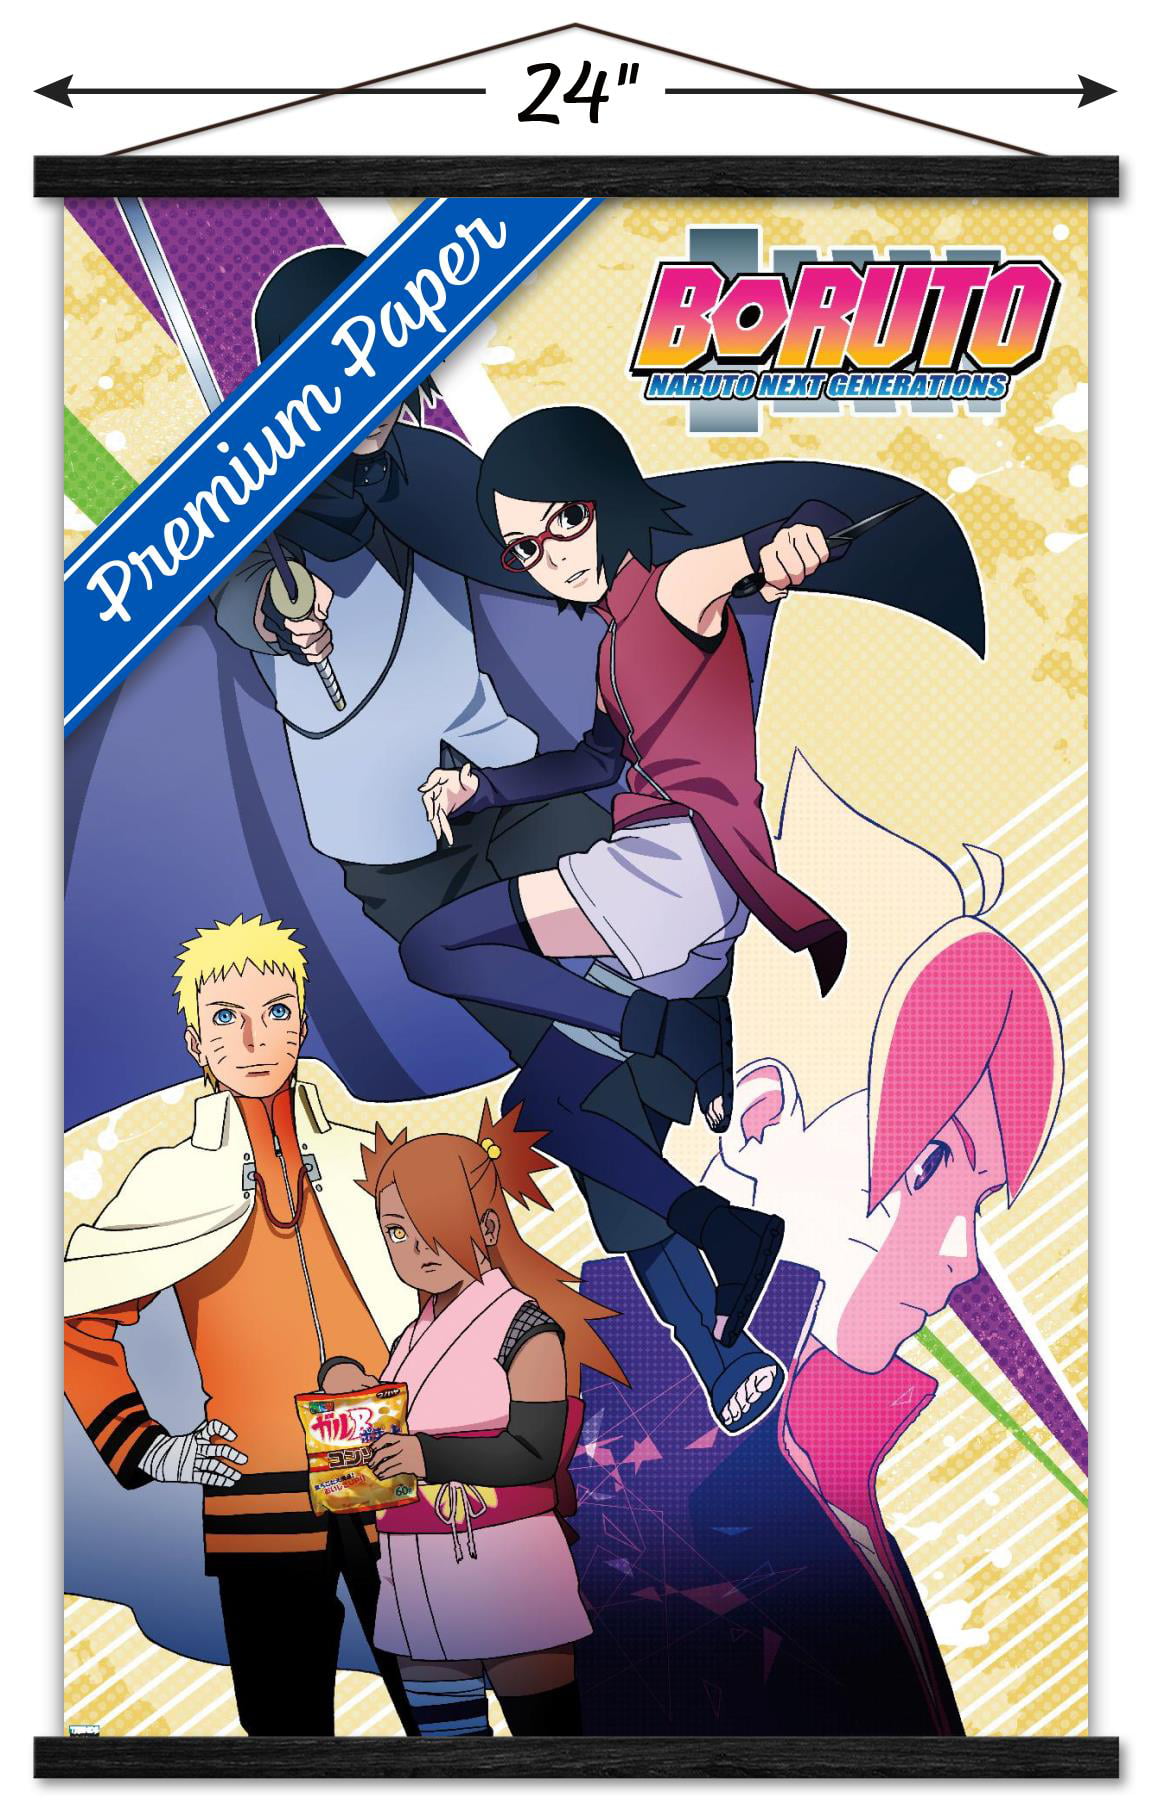 Boruto: Naruto Next Generations Temporada 1 